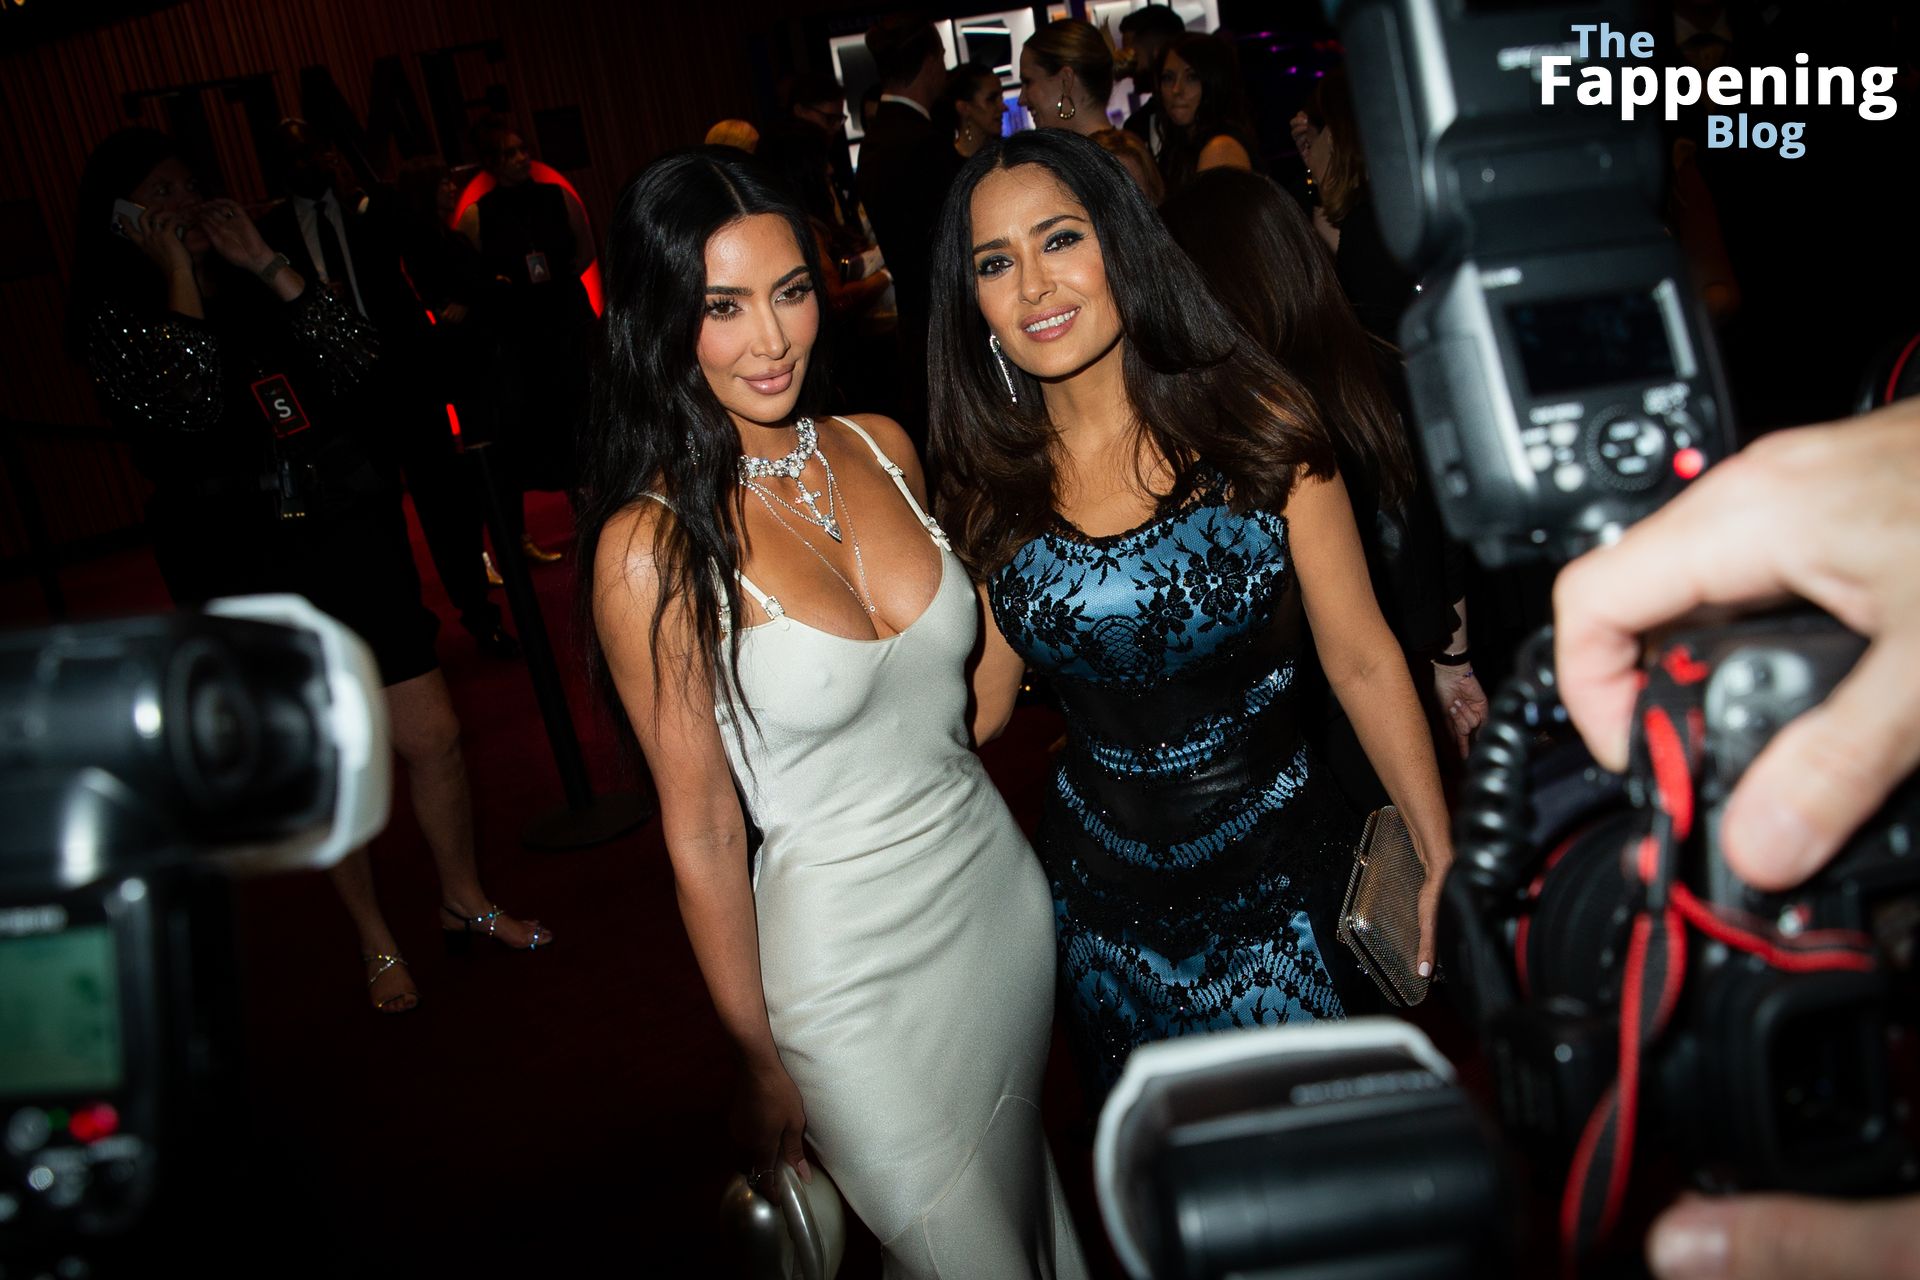 Kim Kardashian Looks Hot at the 2023 TIME100 Gala (125 New Photos)